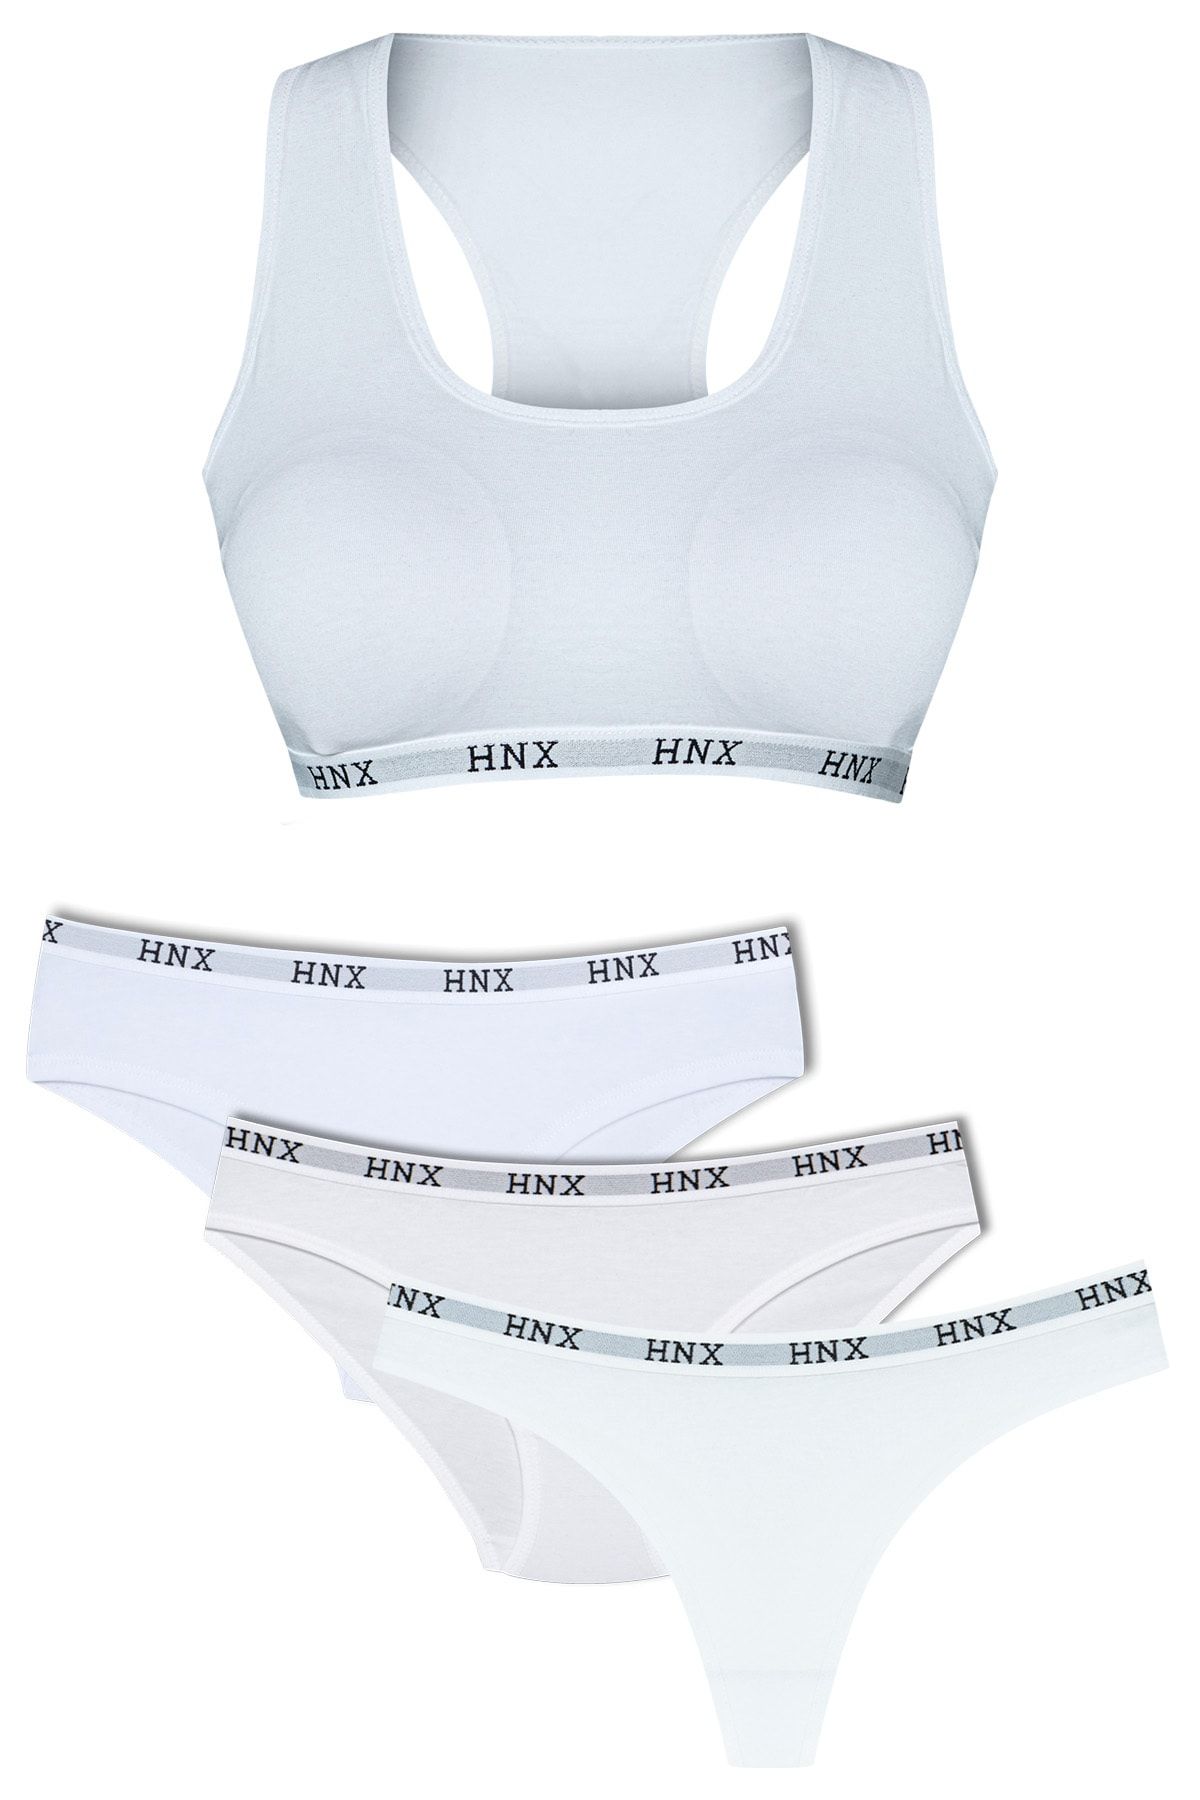 HNX 4-Piece Sports Set Padded Sports Bra Half Shorts Panties